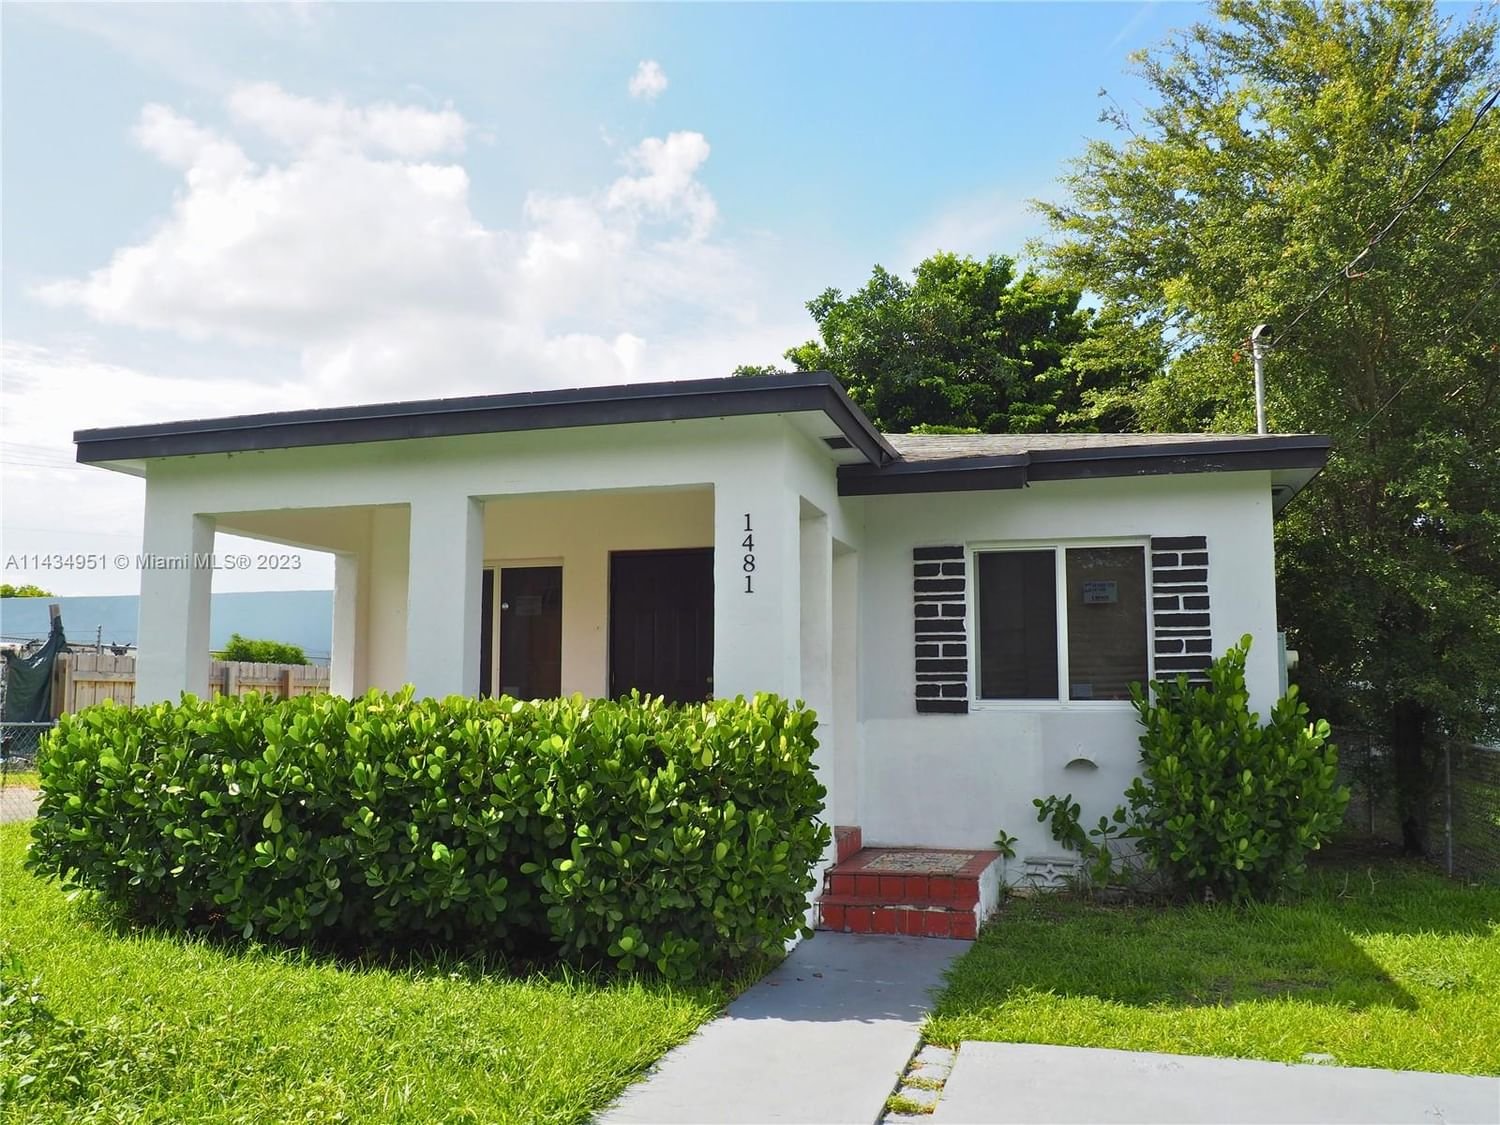 Real estate property located at 1481 68th St, Miami-Dade County, Miami, FL